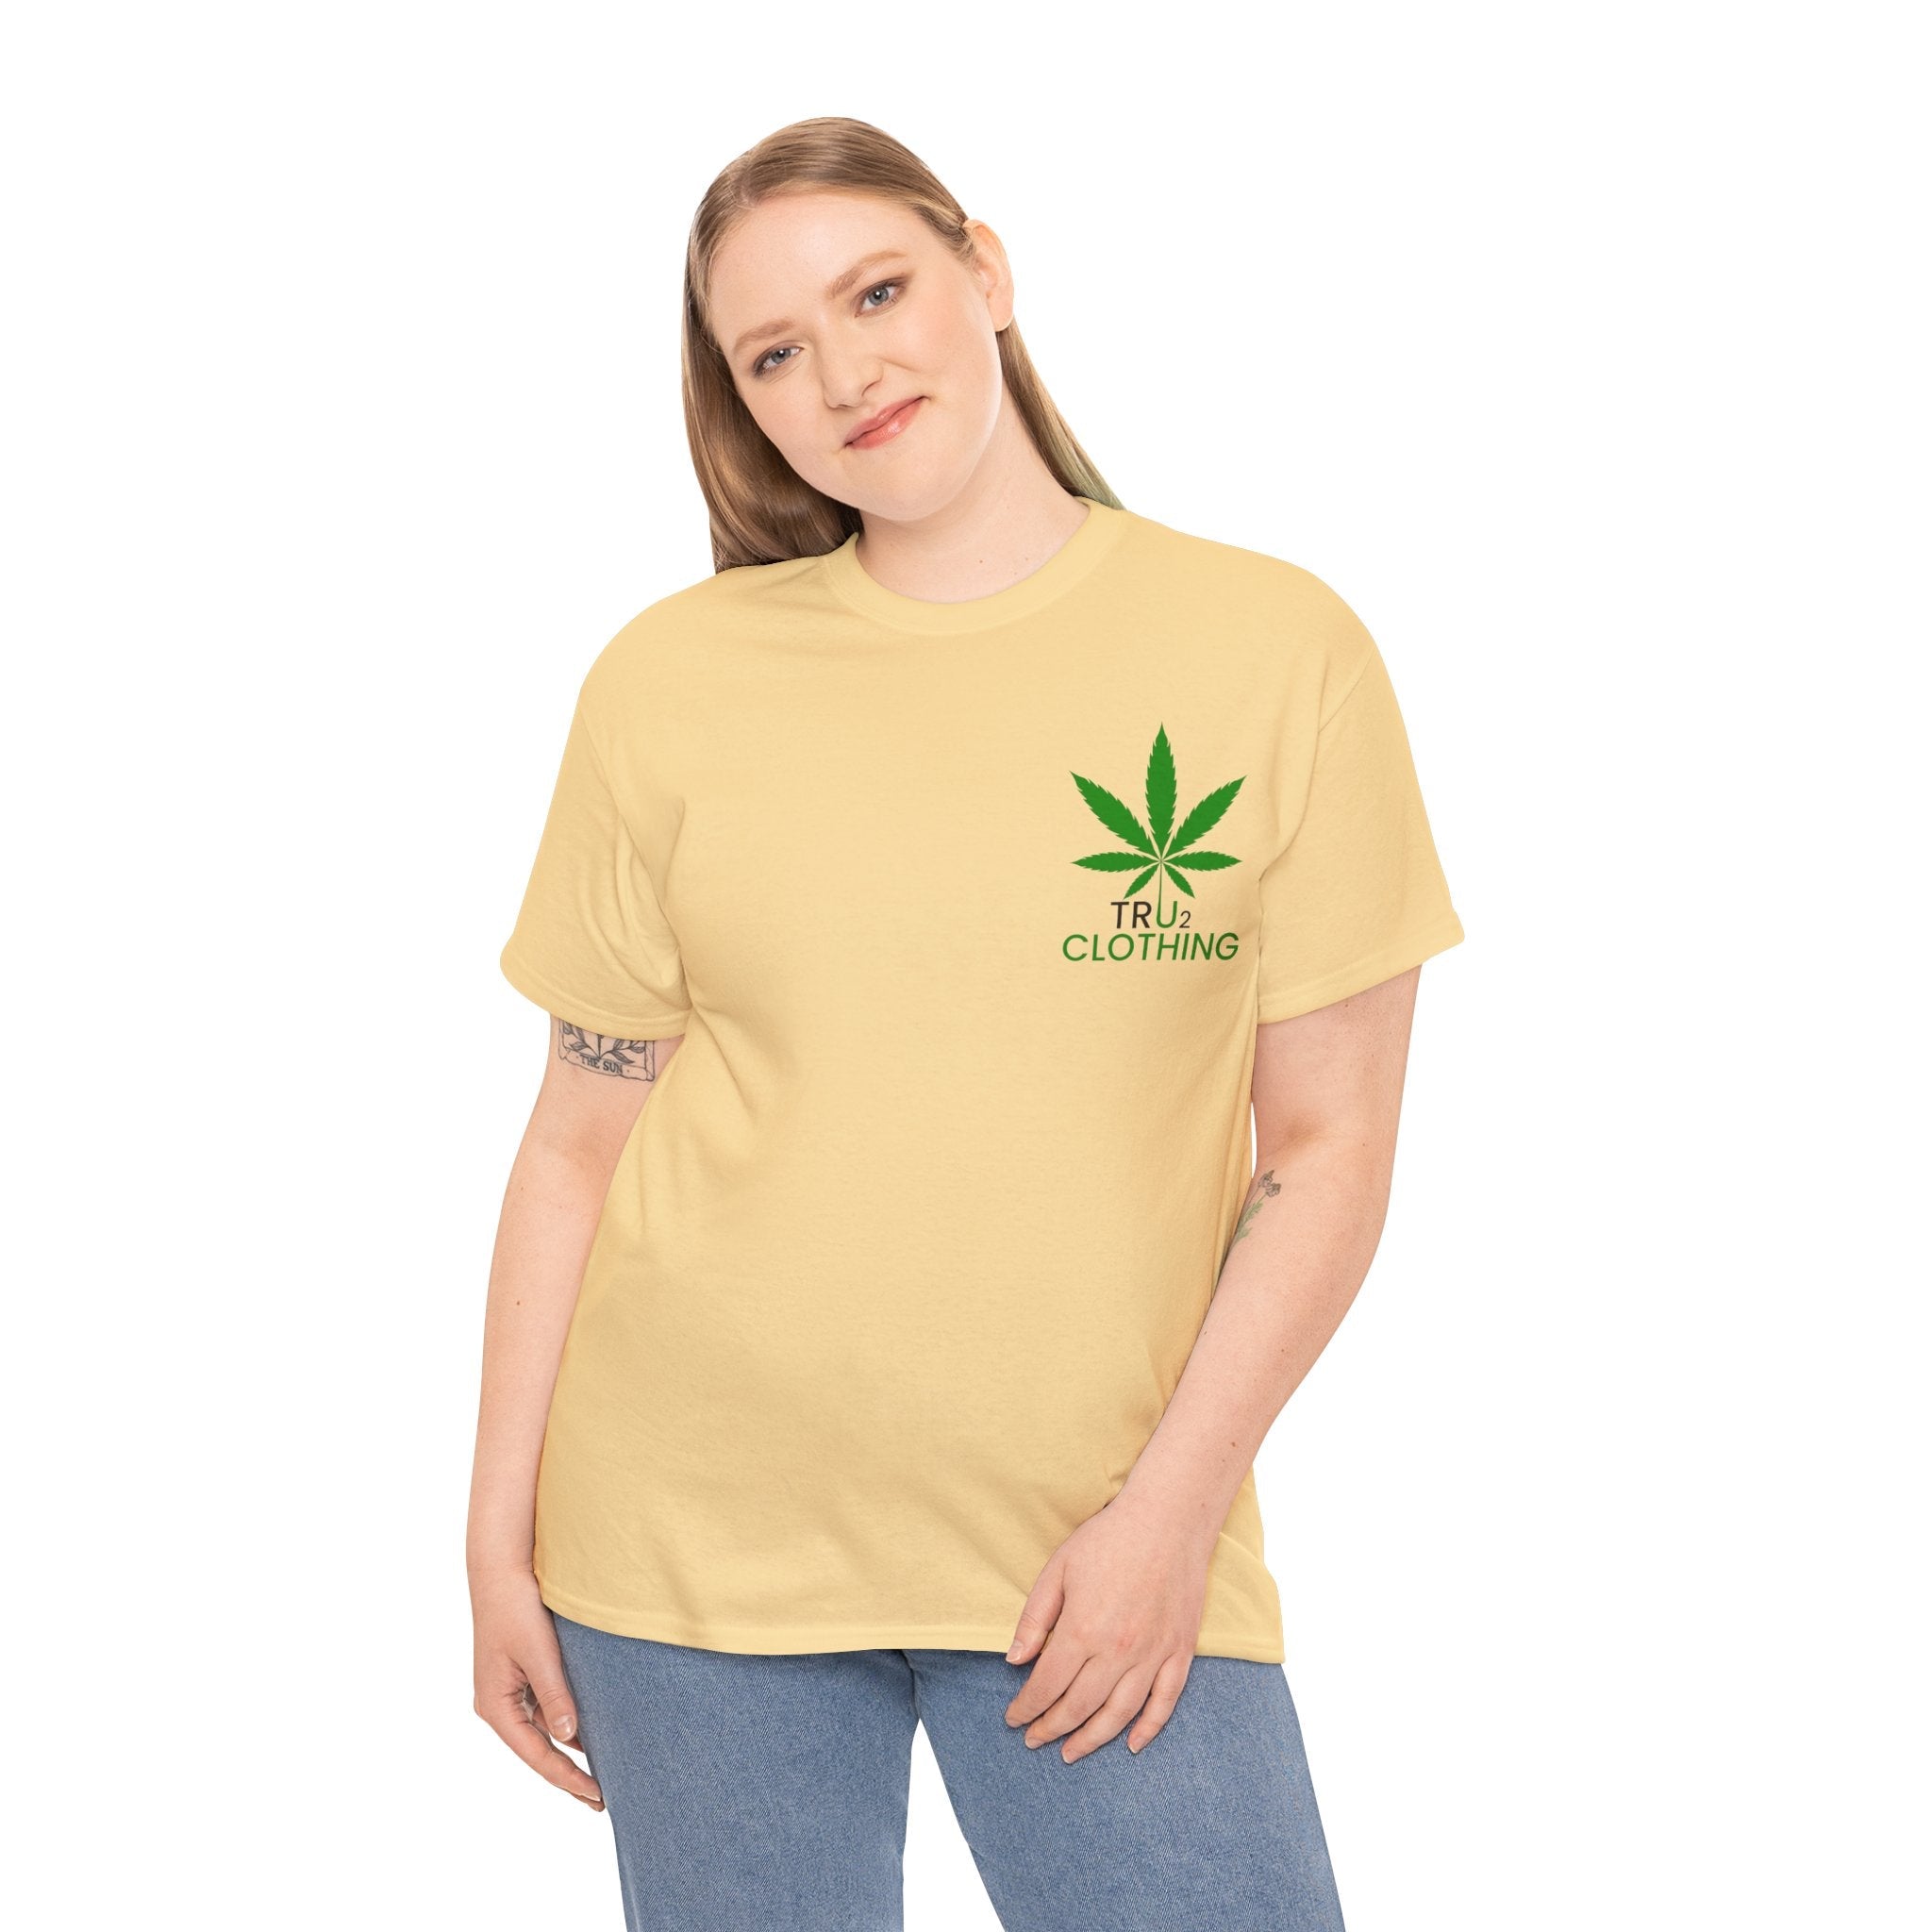 Cannabis Culture Logo Tee - TRU2 Clothing